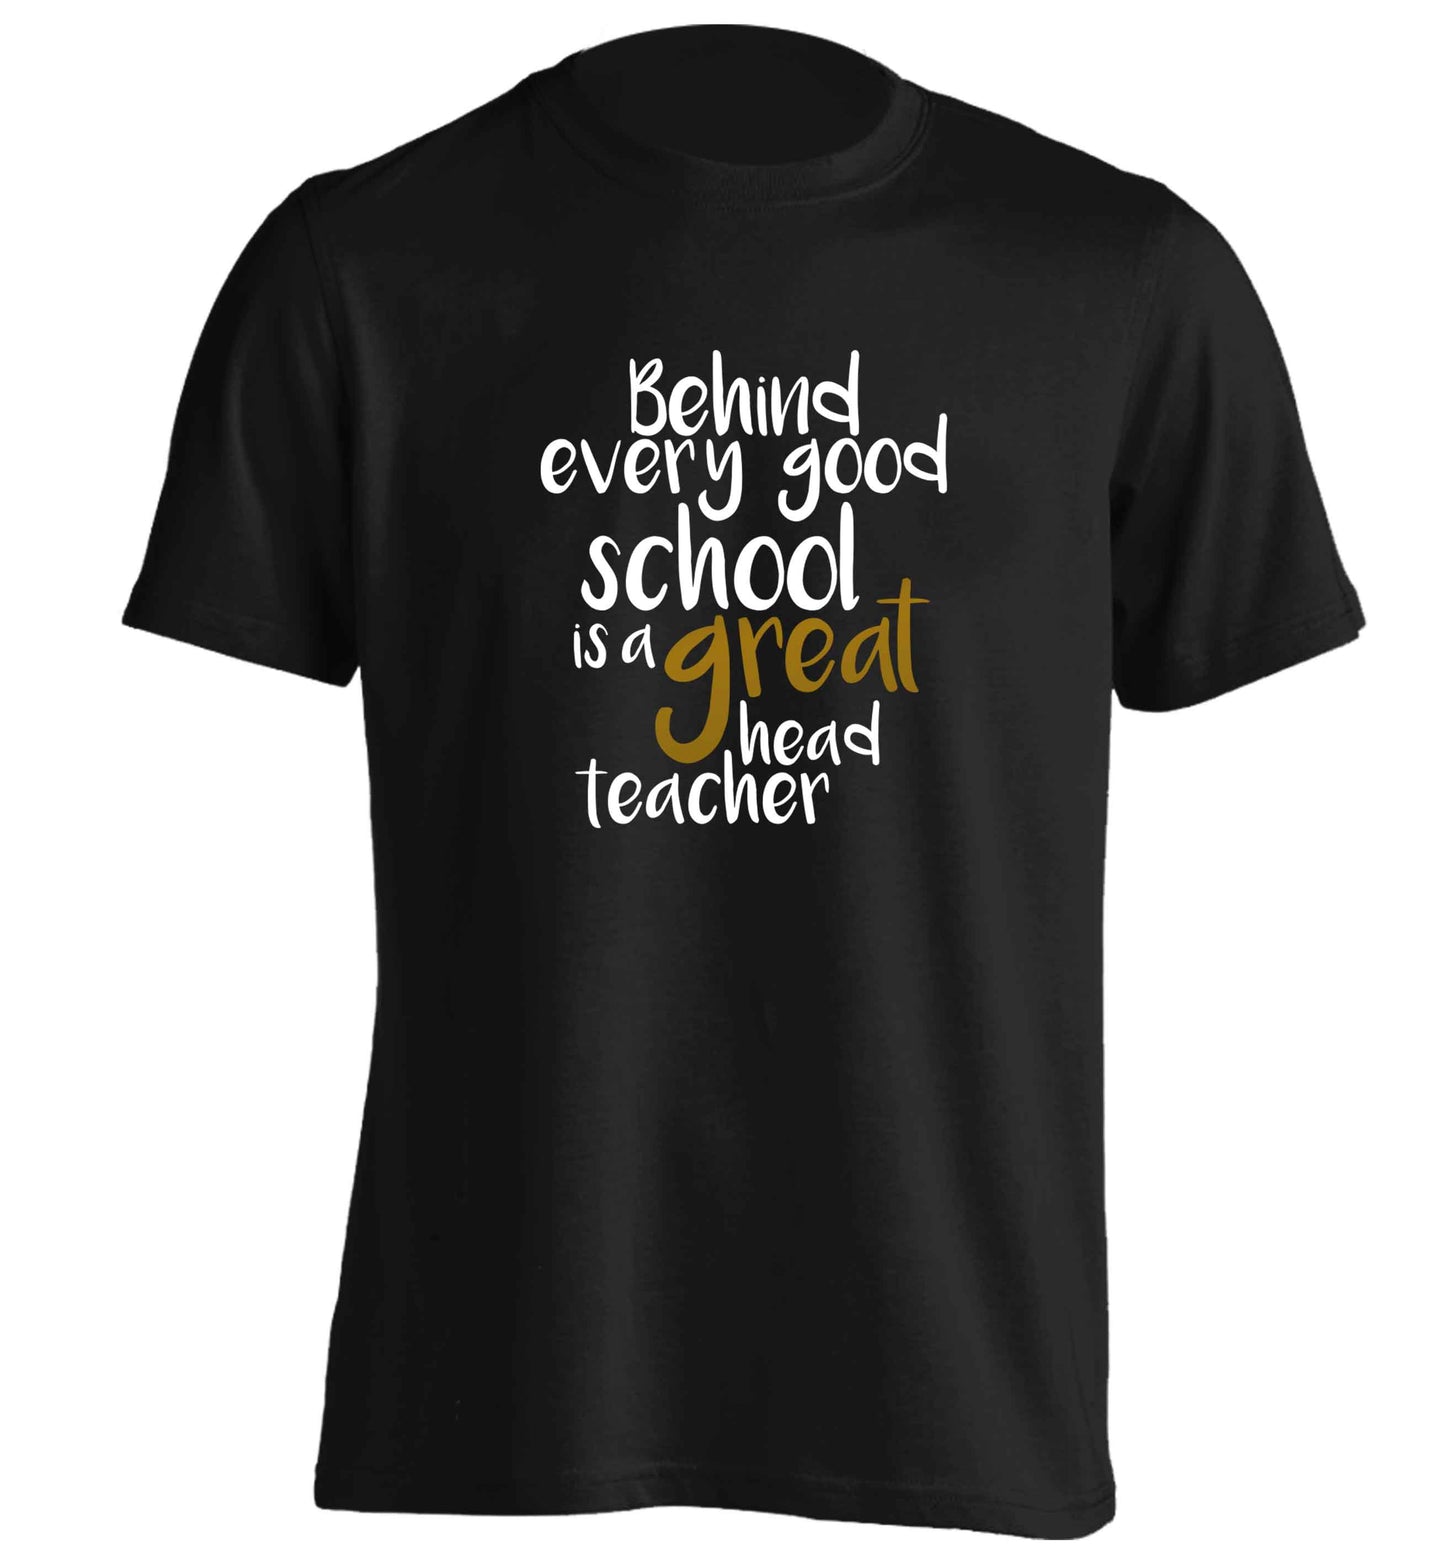 Behind every good school is a great head teacher adults unisex black Tshirt 2XL